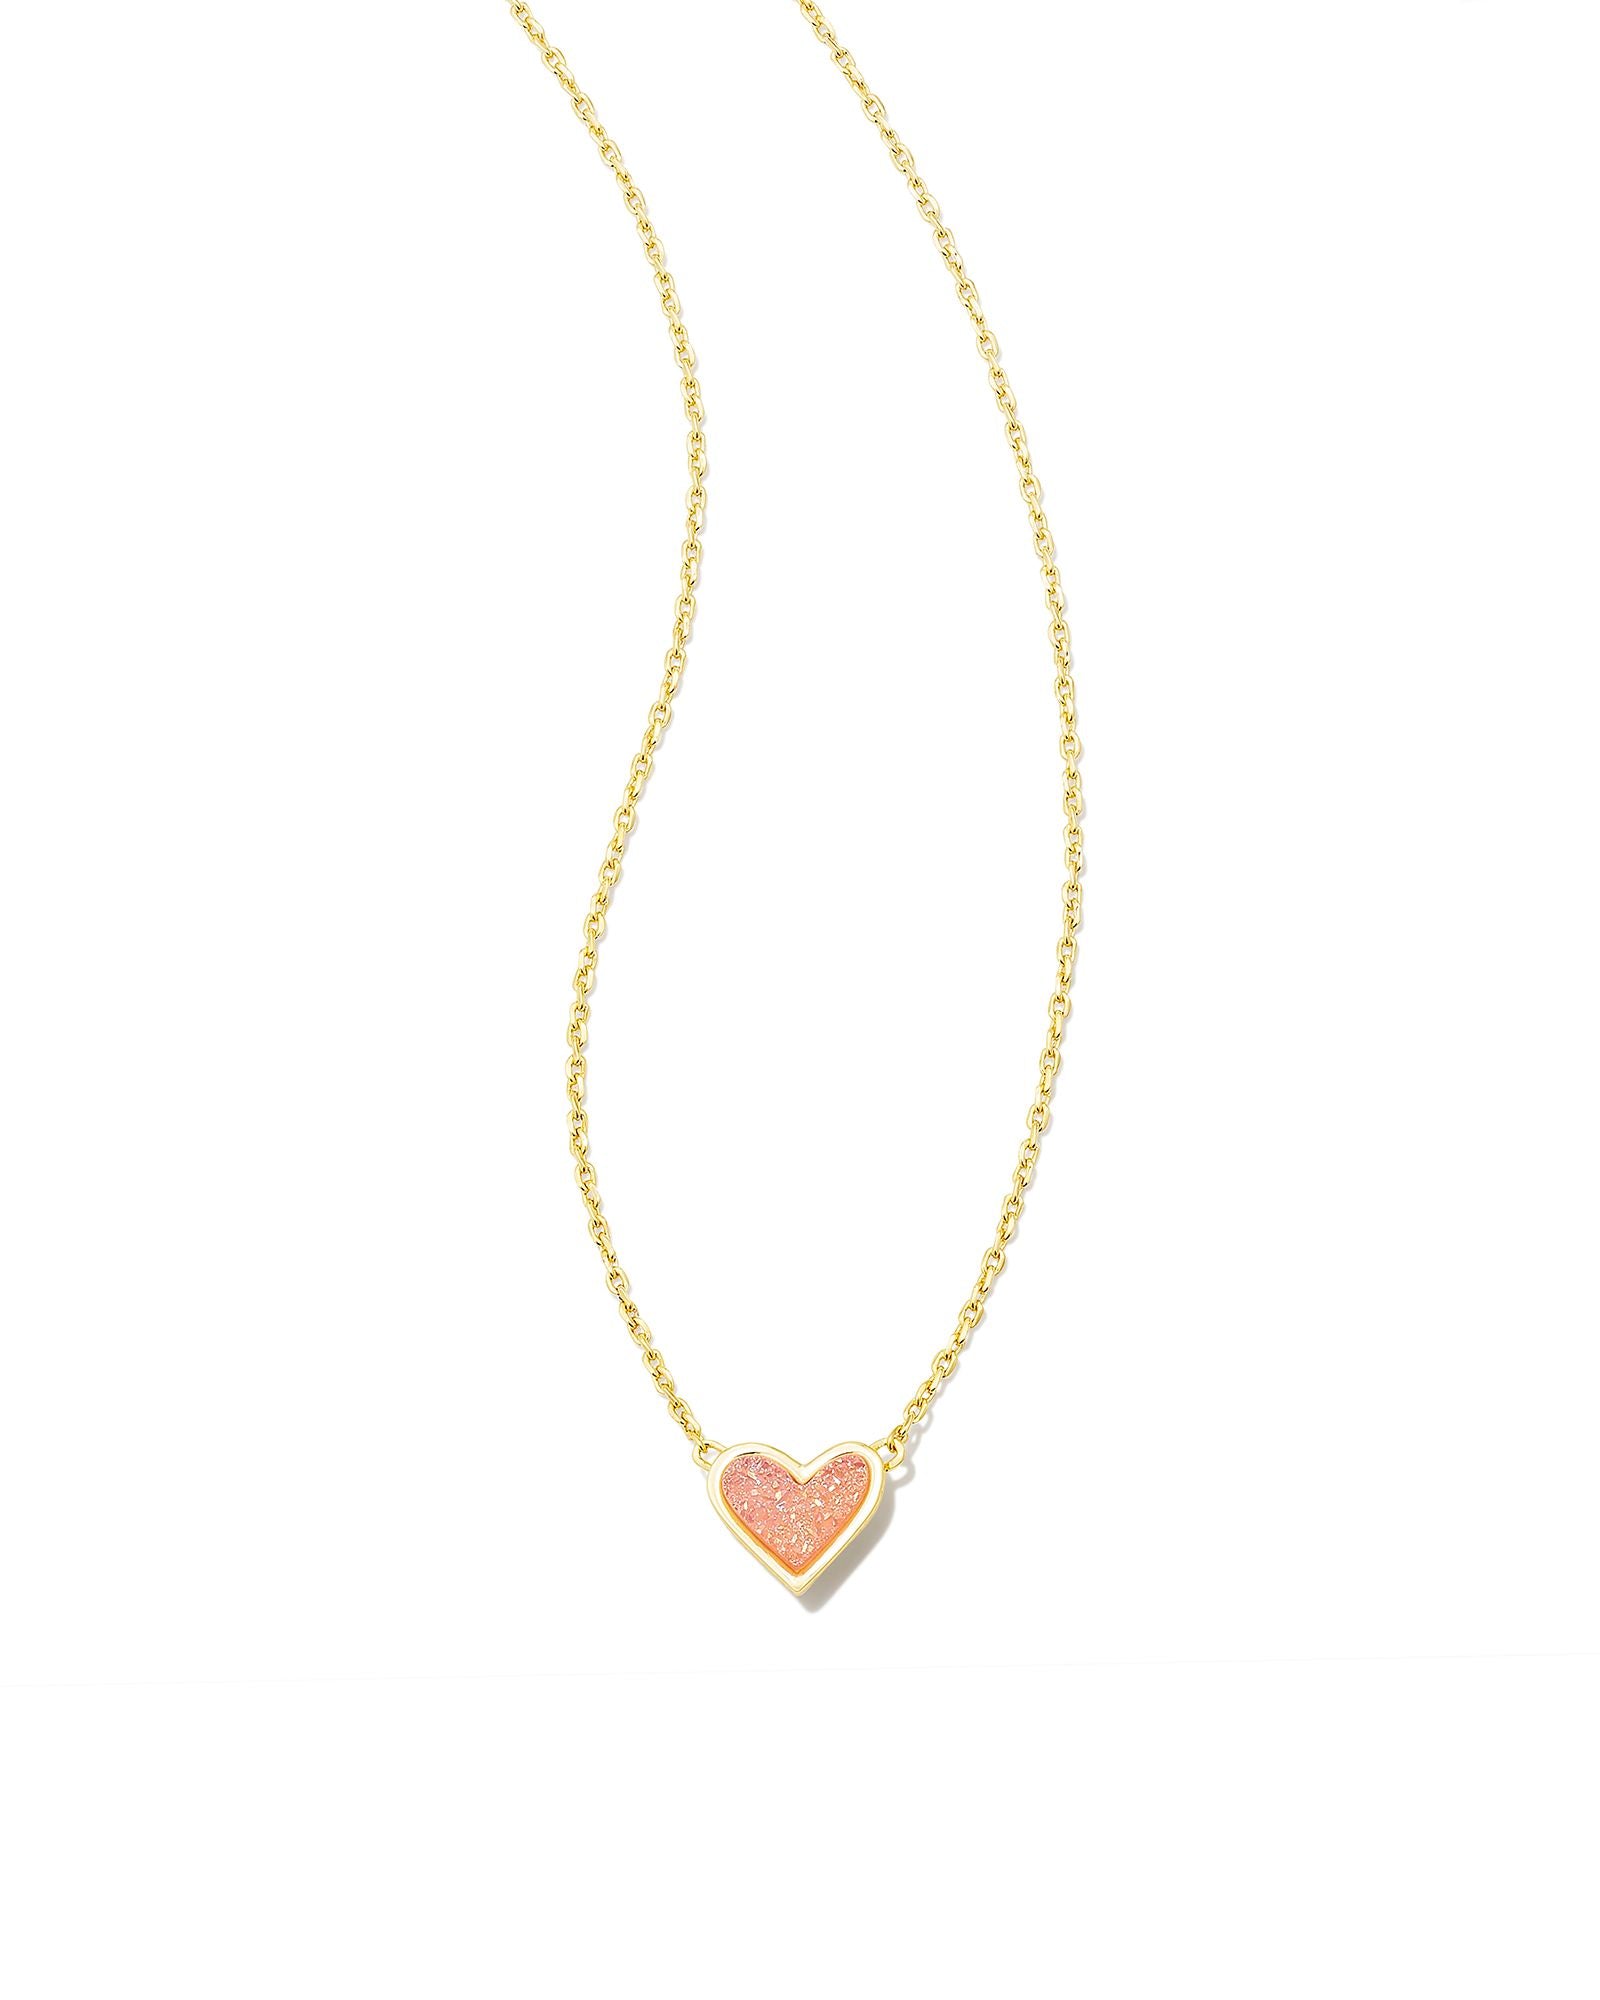 Framed Ari Heart Gold Necklace Light Pink Drusy